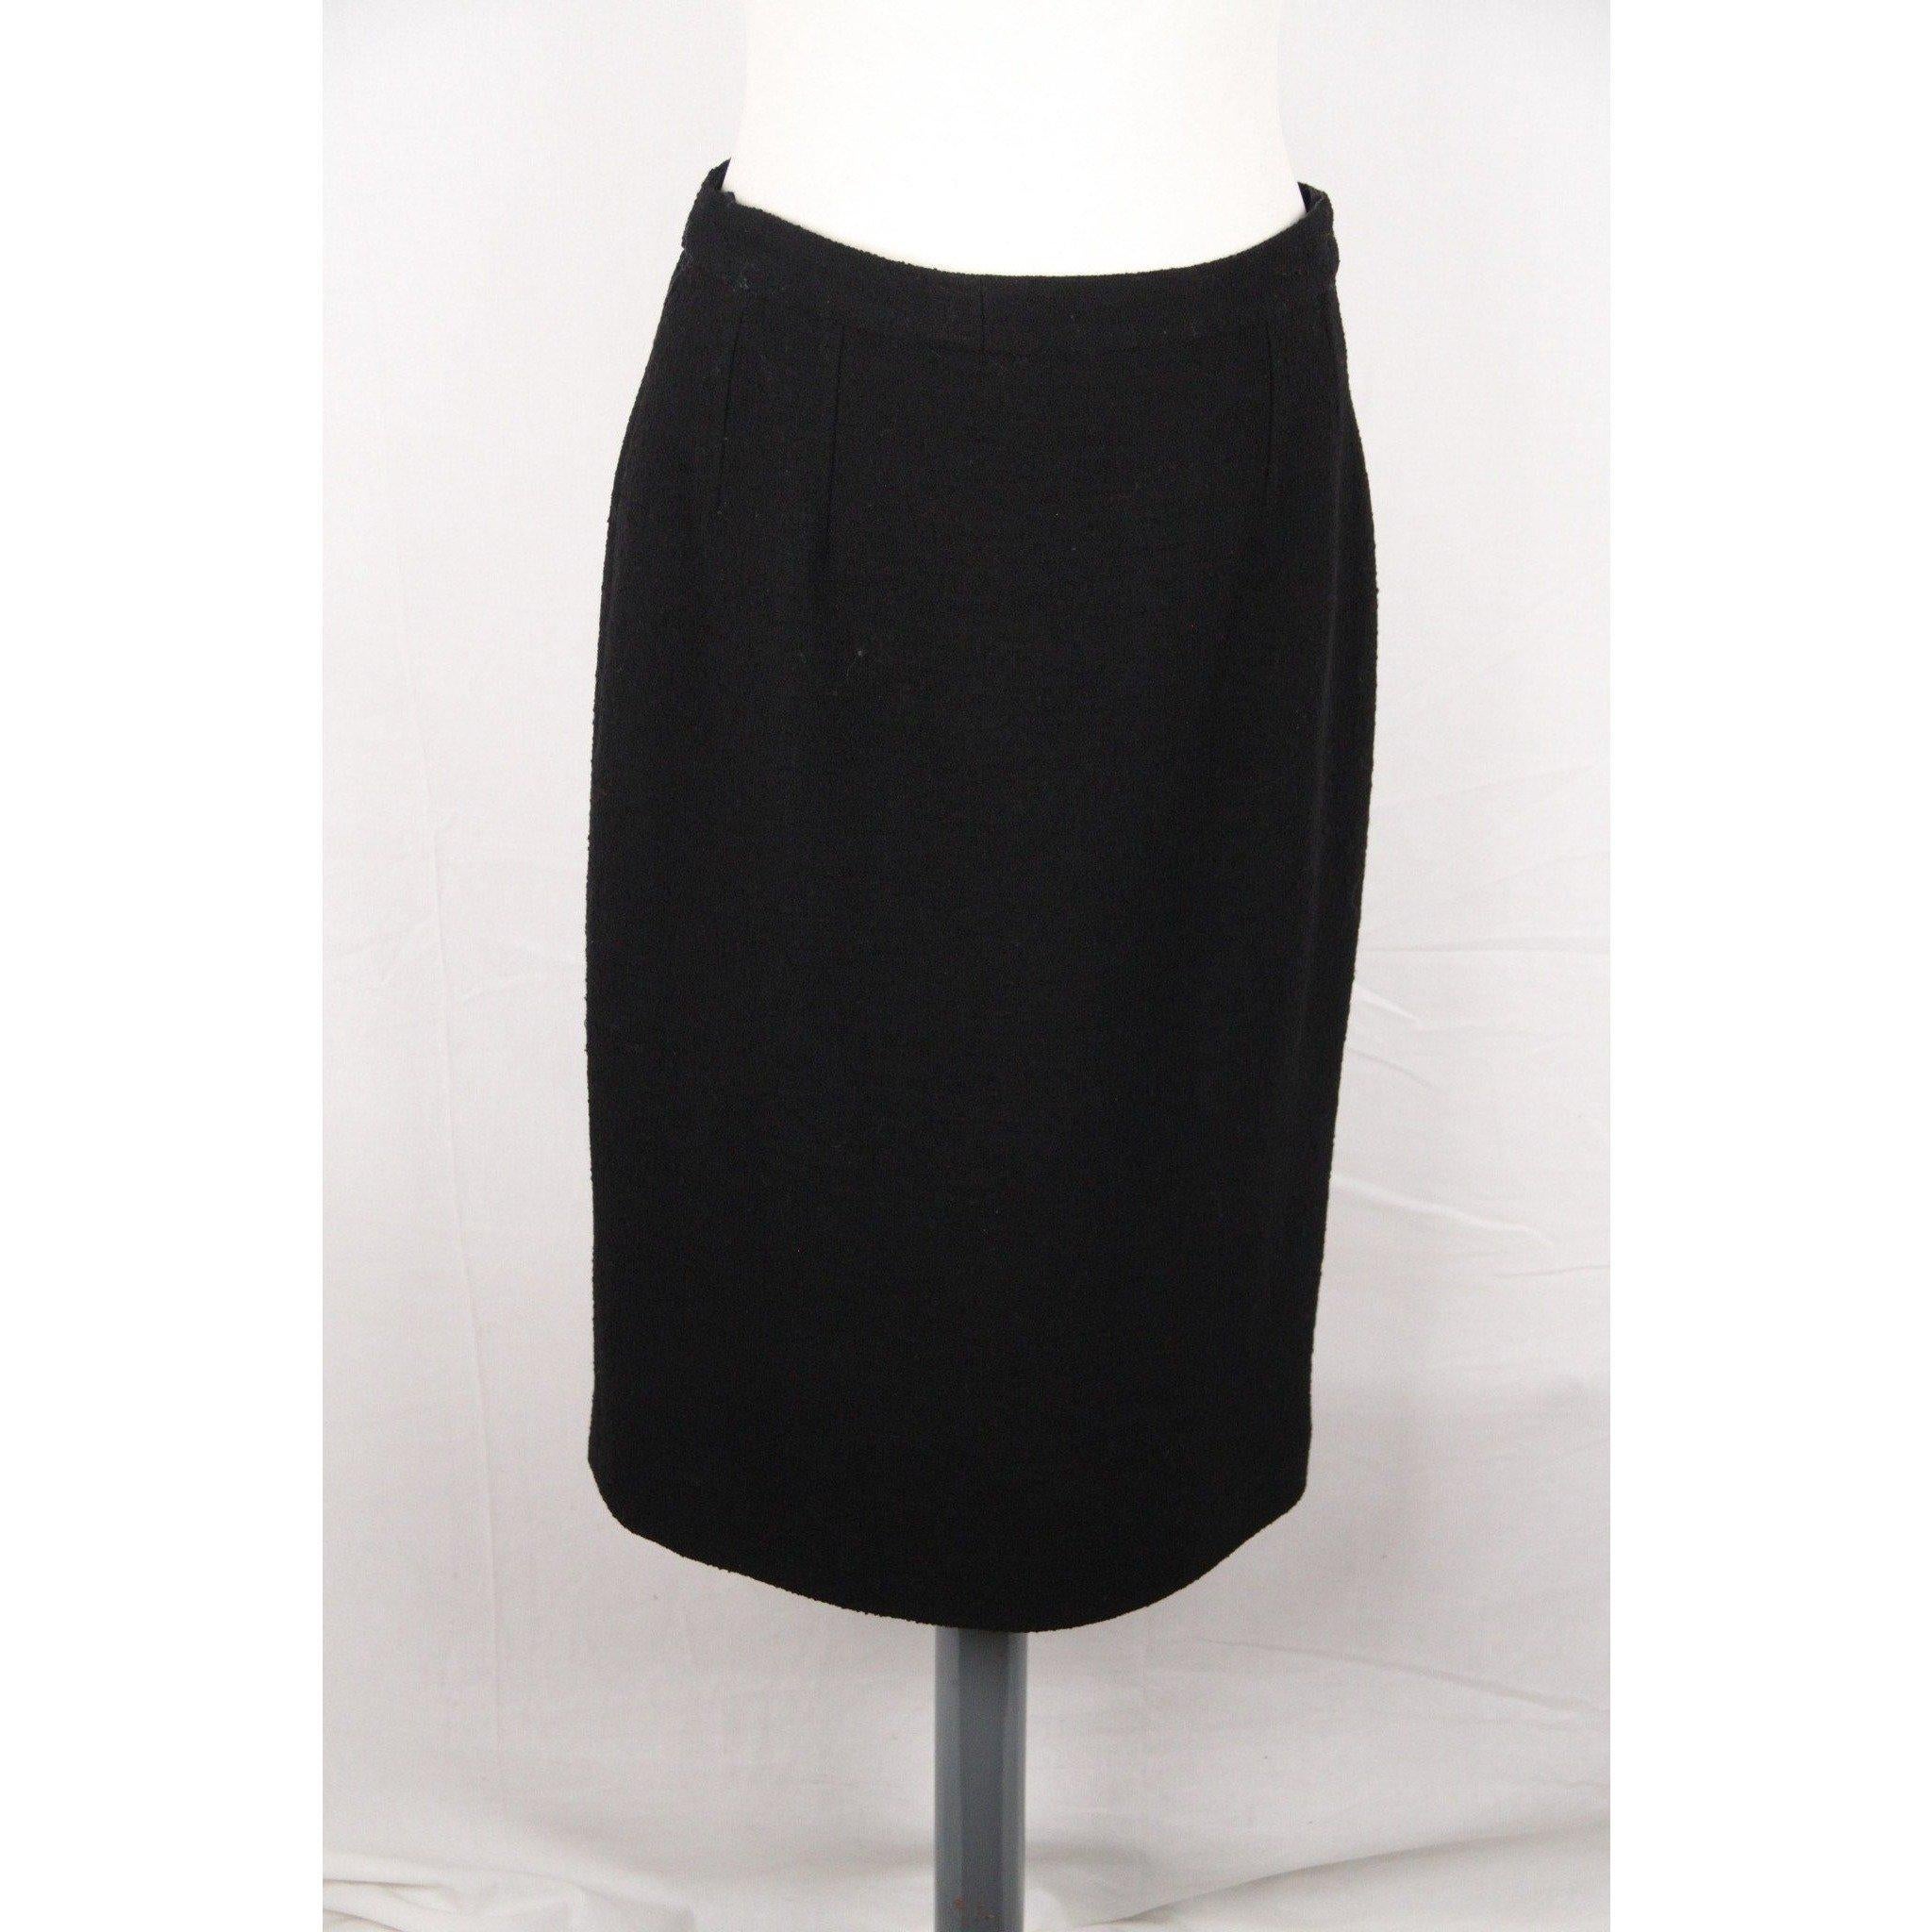 Chanel Vintage 1993 Blue and Black Wool Blend Skirt Suit Size 42 3